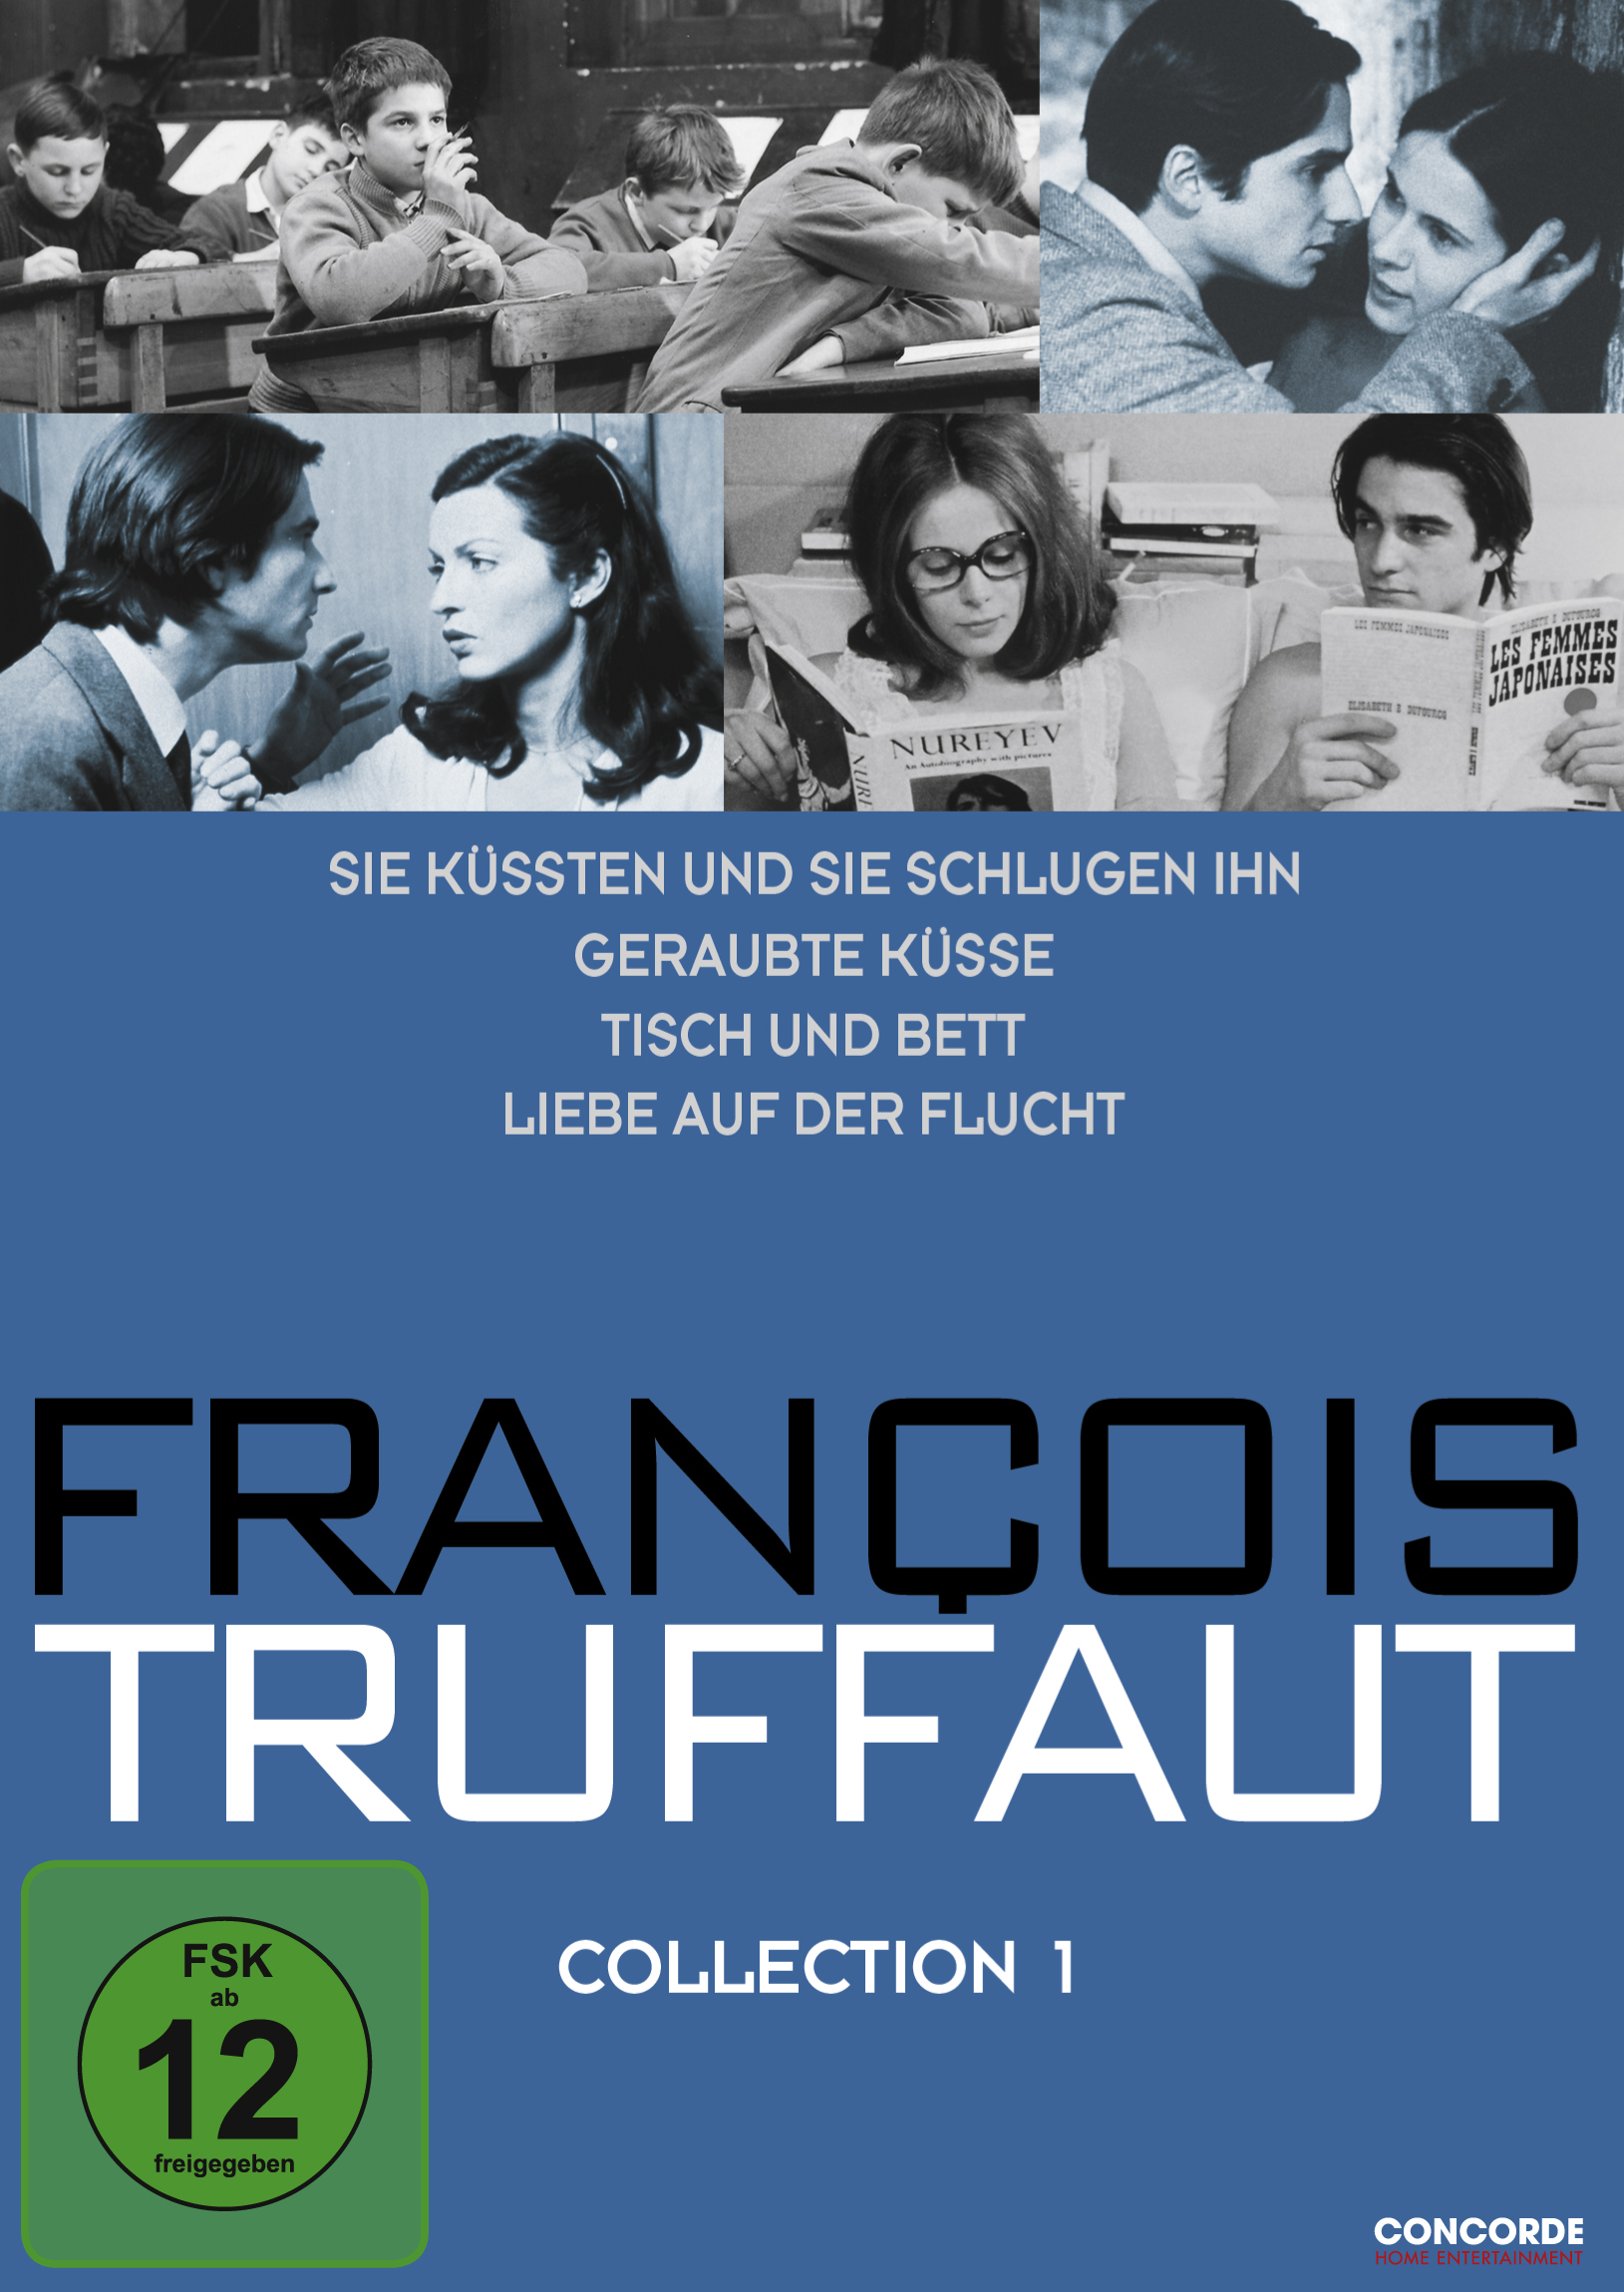 Francois Truffaut DVD Collection 1